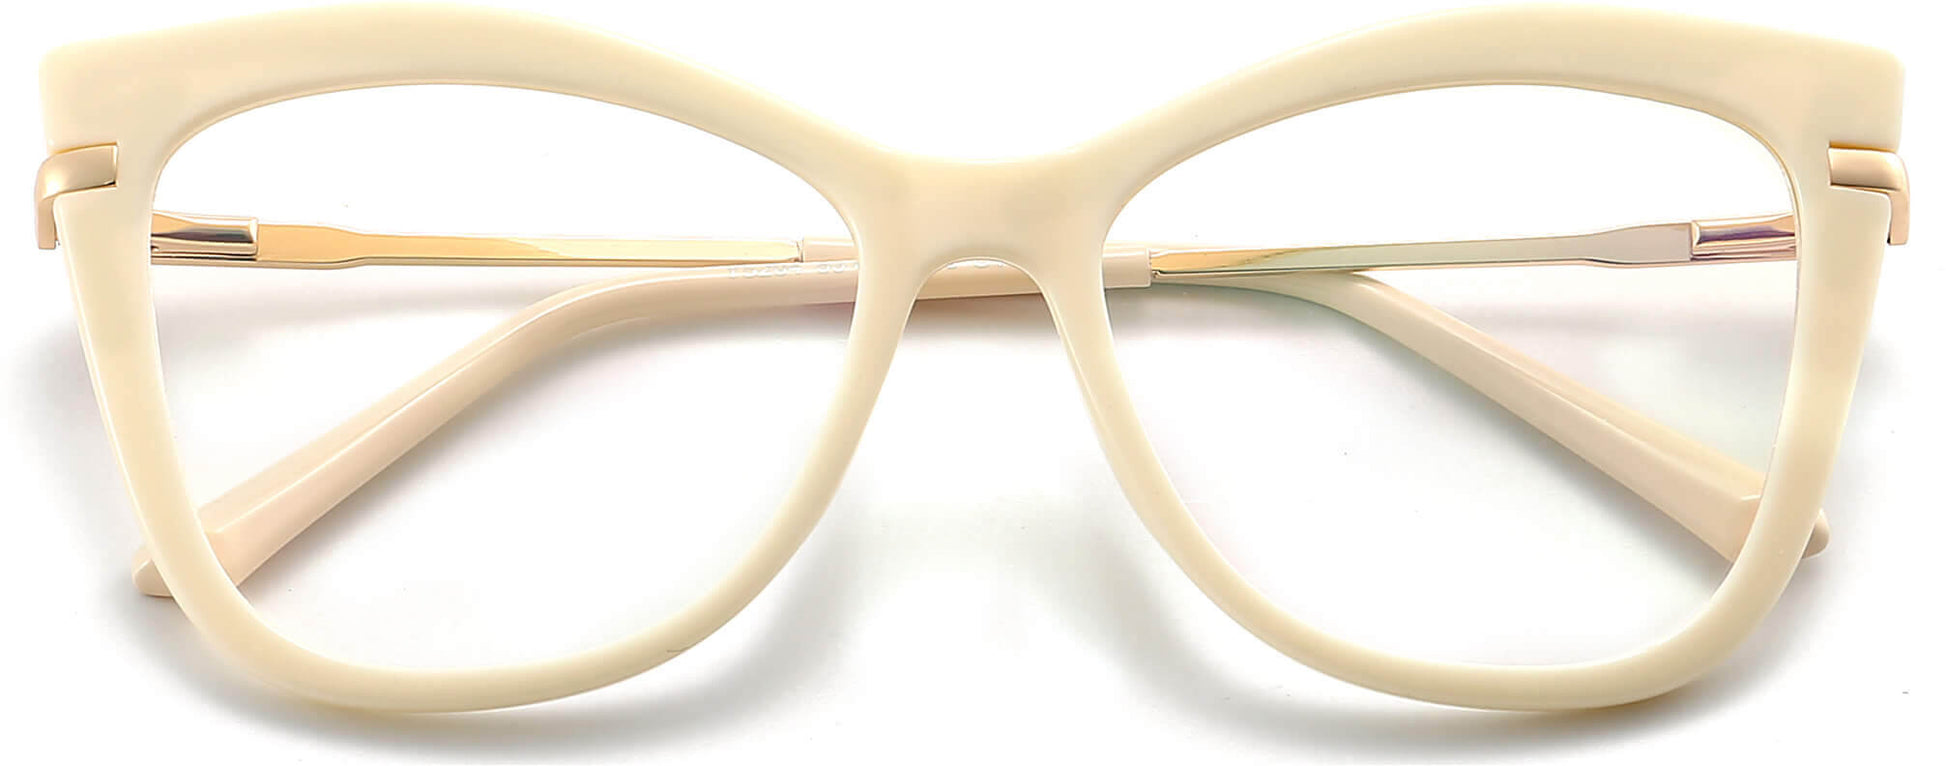 Sydney Cateye White Eyeglasses from ANRRI, closed view